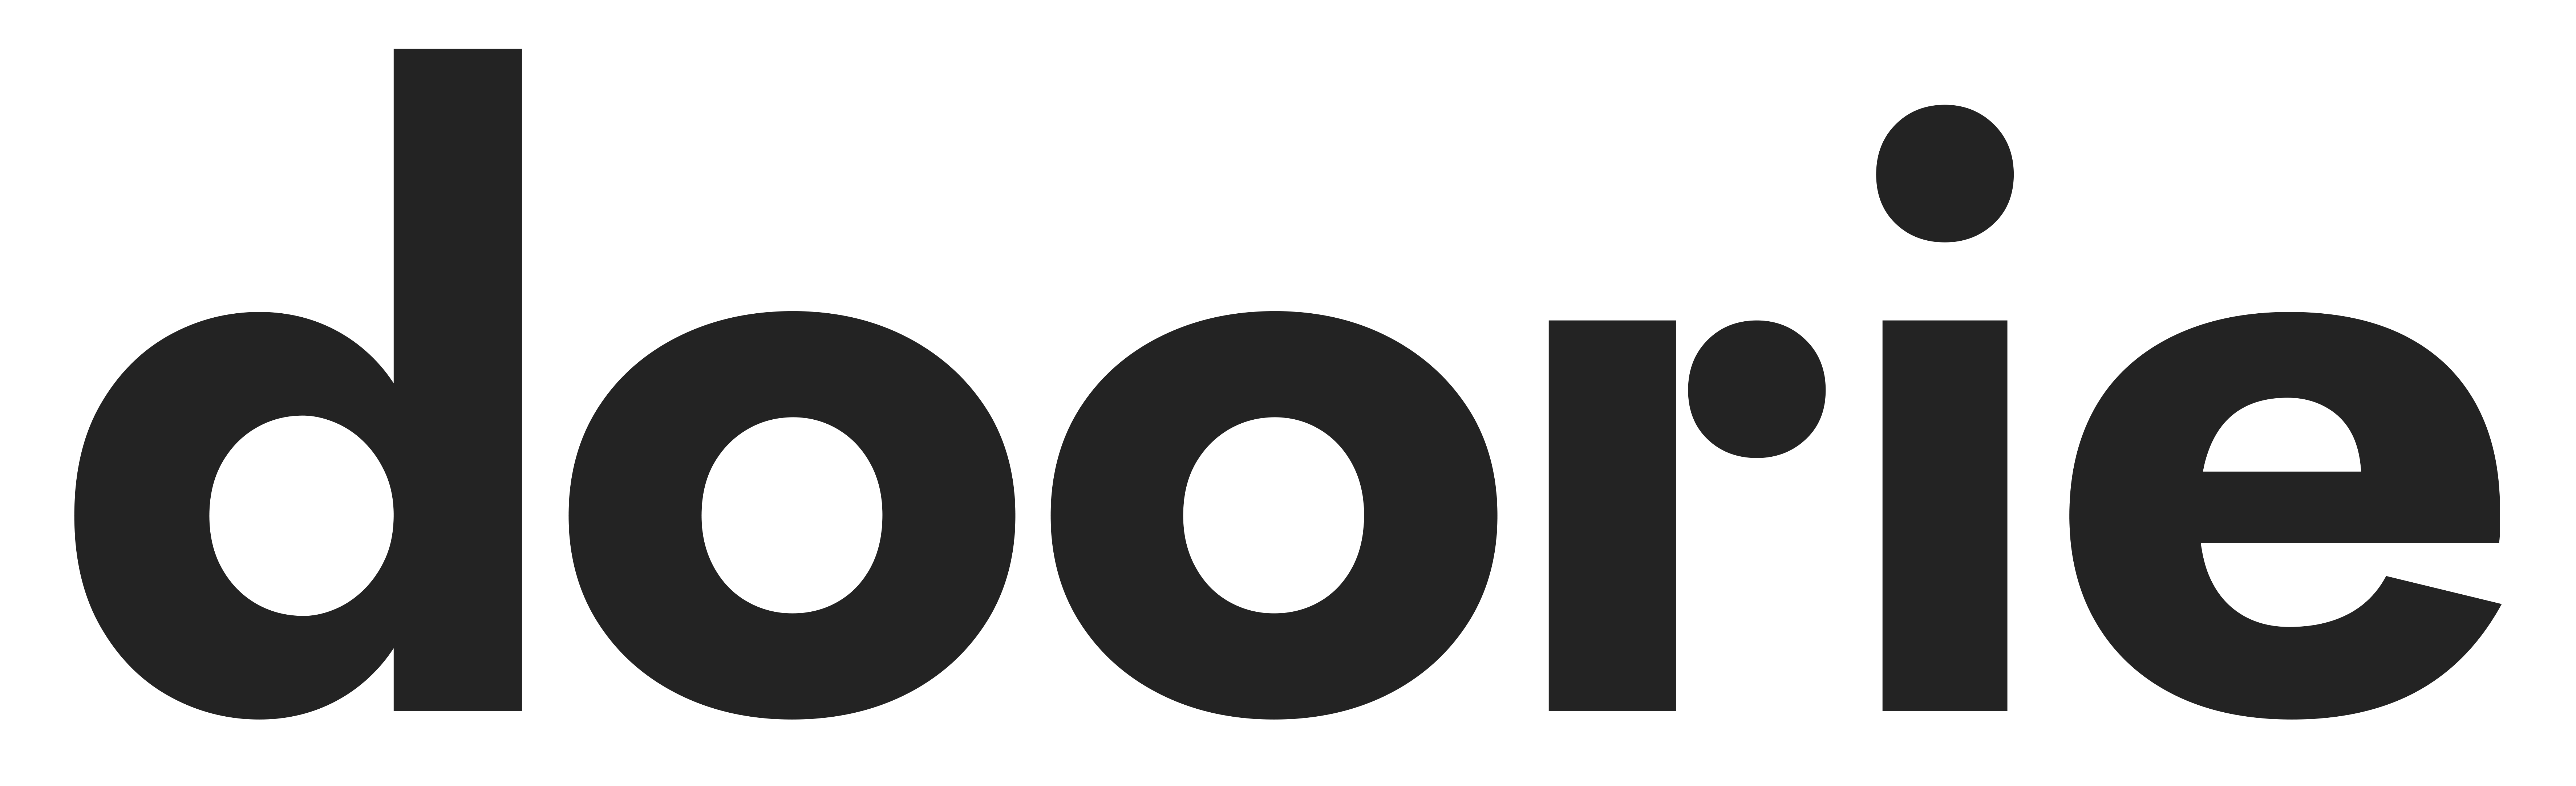 doorie-logo2020-cmyk-grey